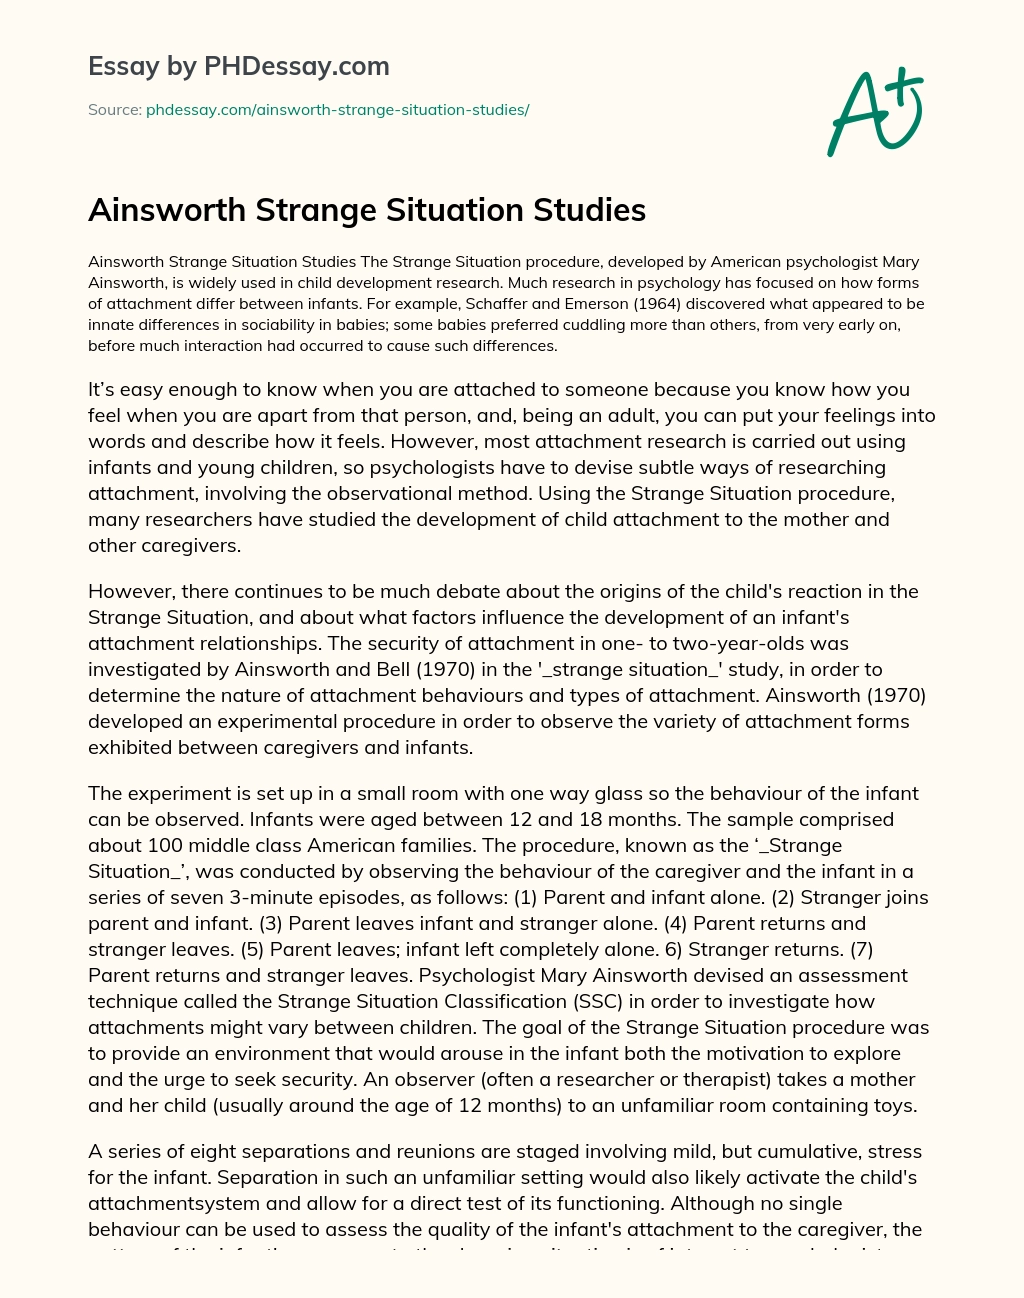 Ainsworth Strange Situation Studies essay